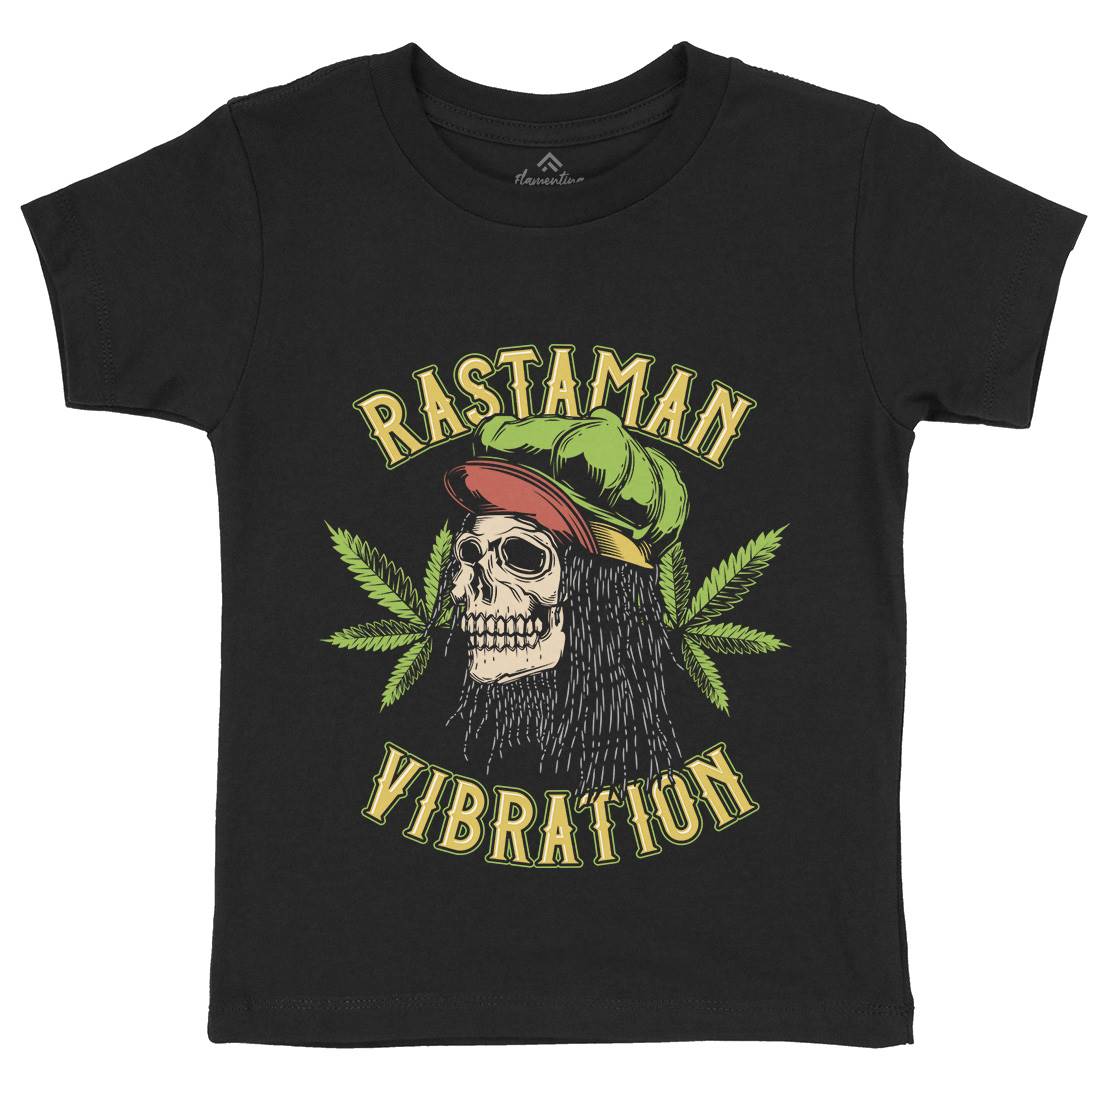 Rastaman Vibration Kids Crew Neck T-Shirt Drugs B805